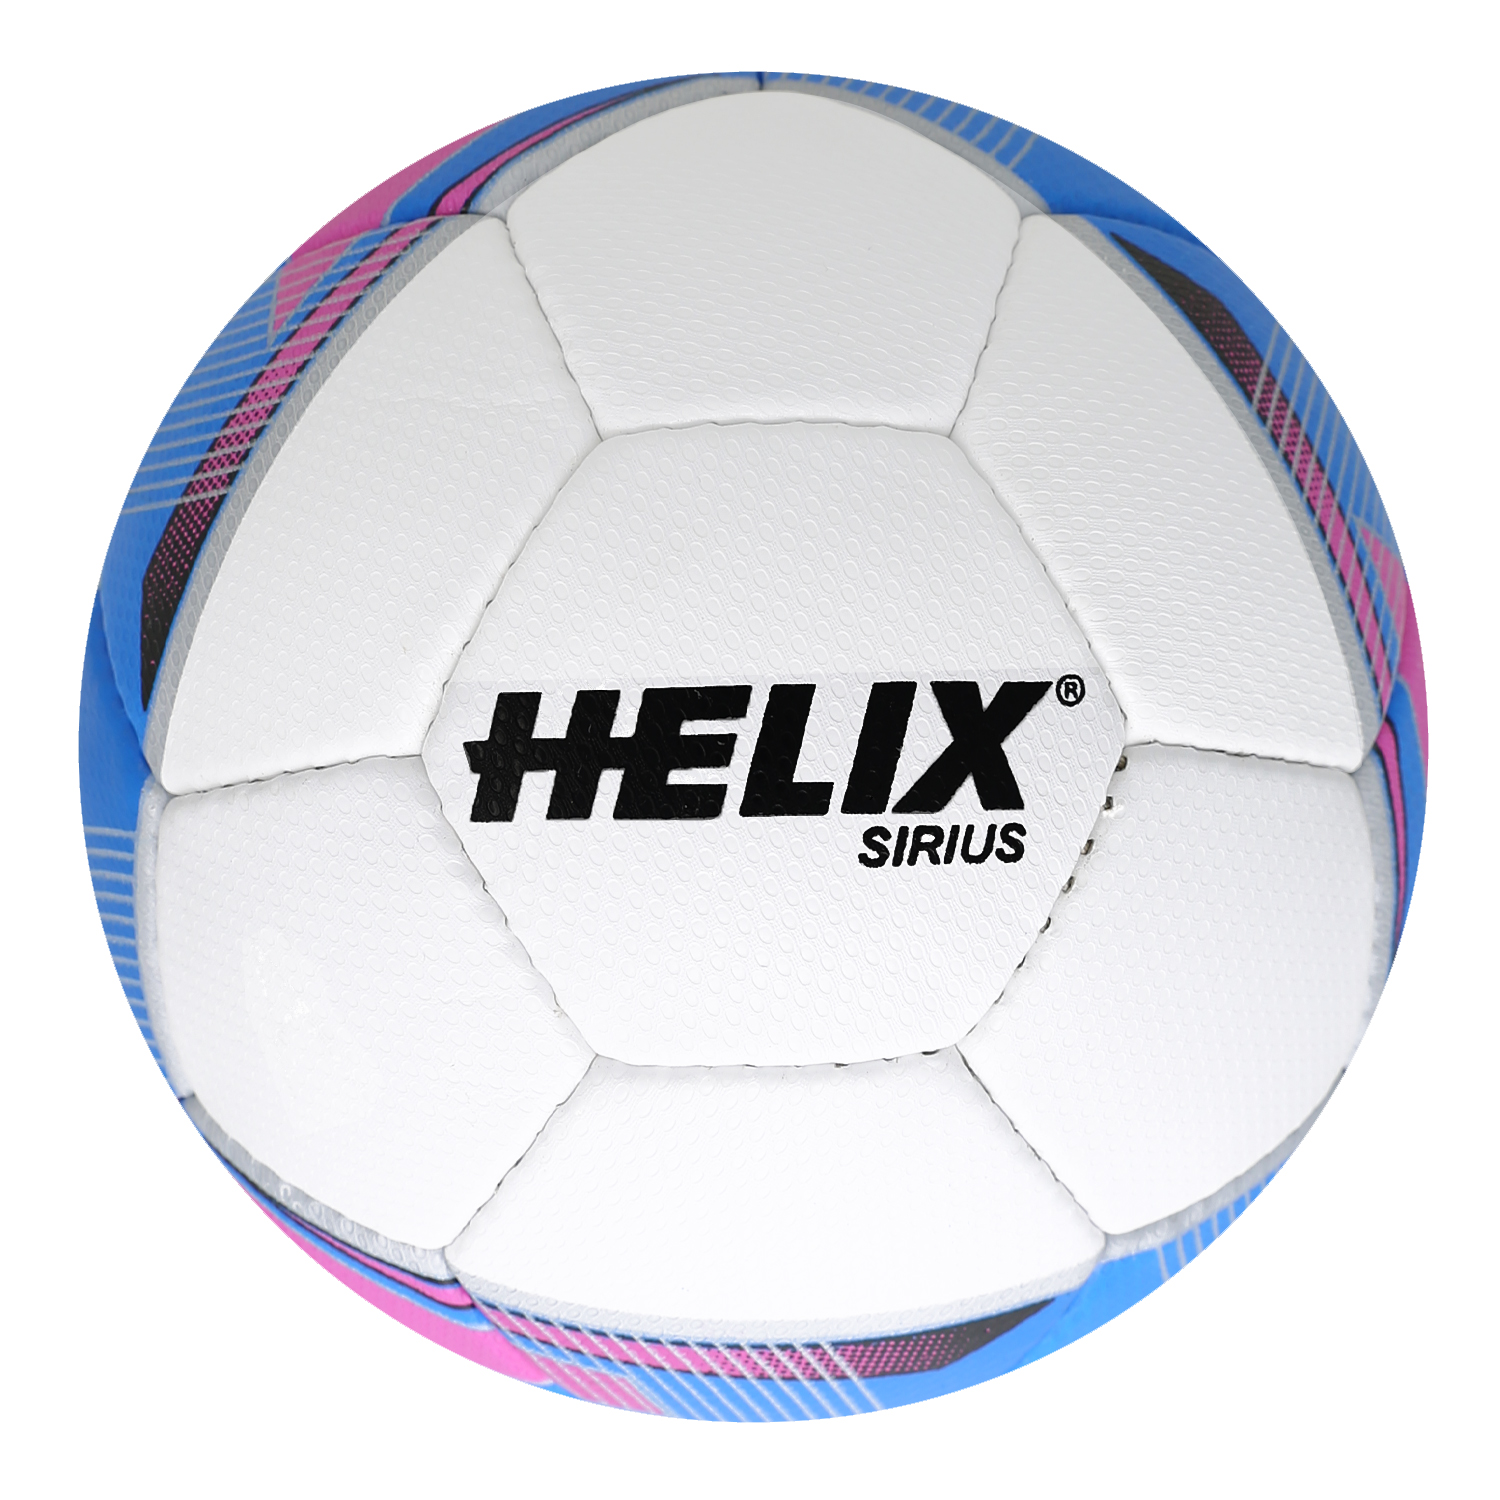 Helix Sirius Soccer Ball No: 5